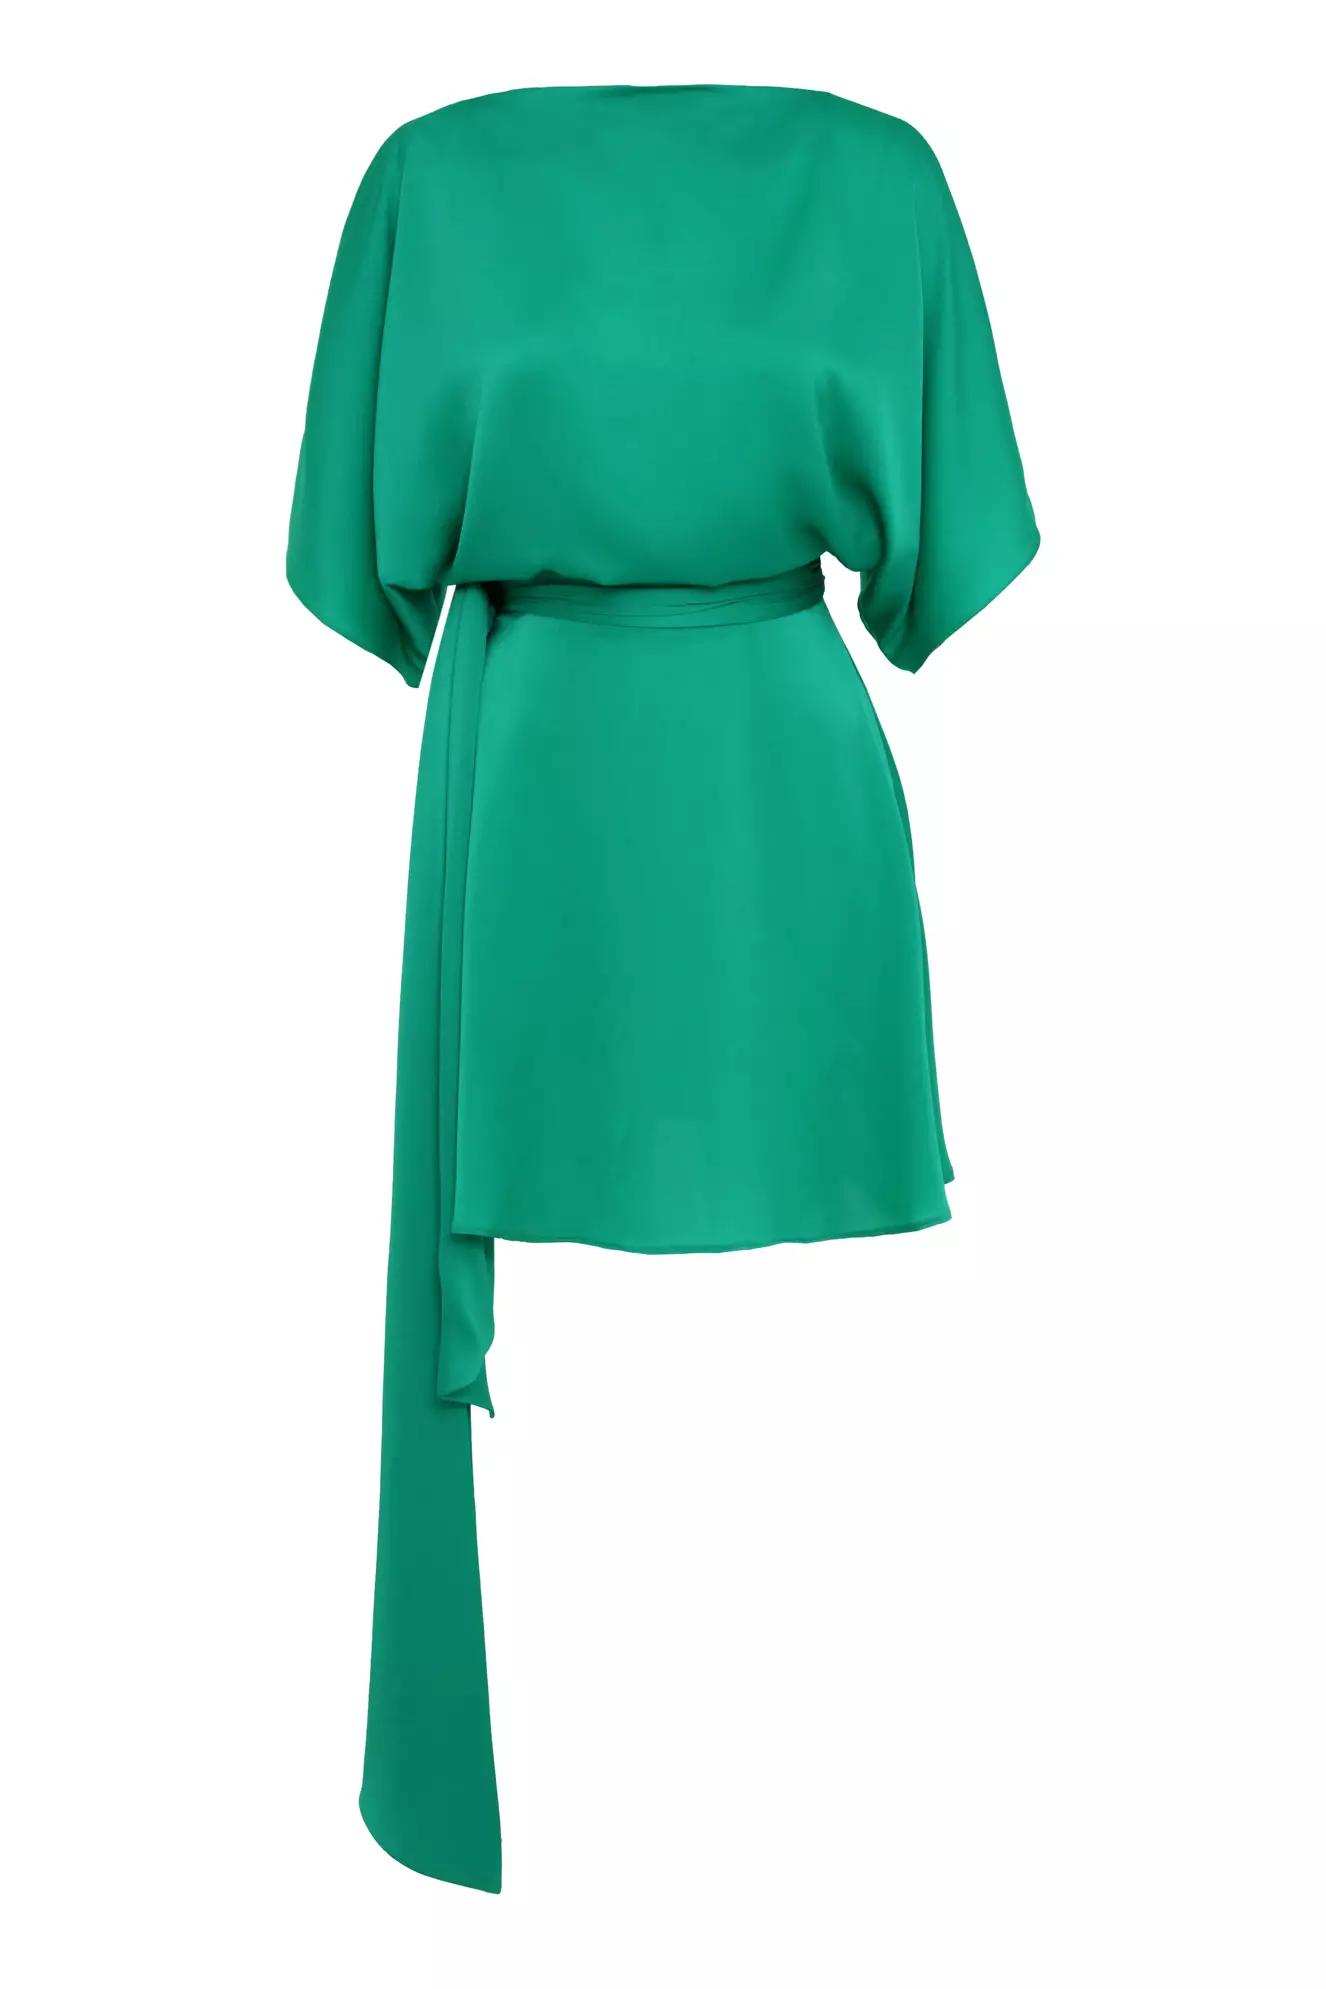 Green satin short sleeve mini dress